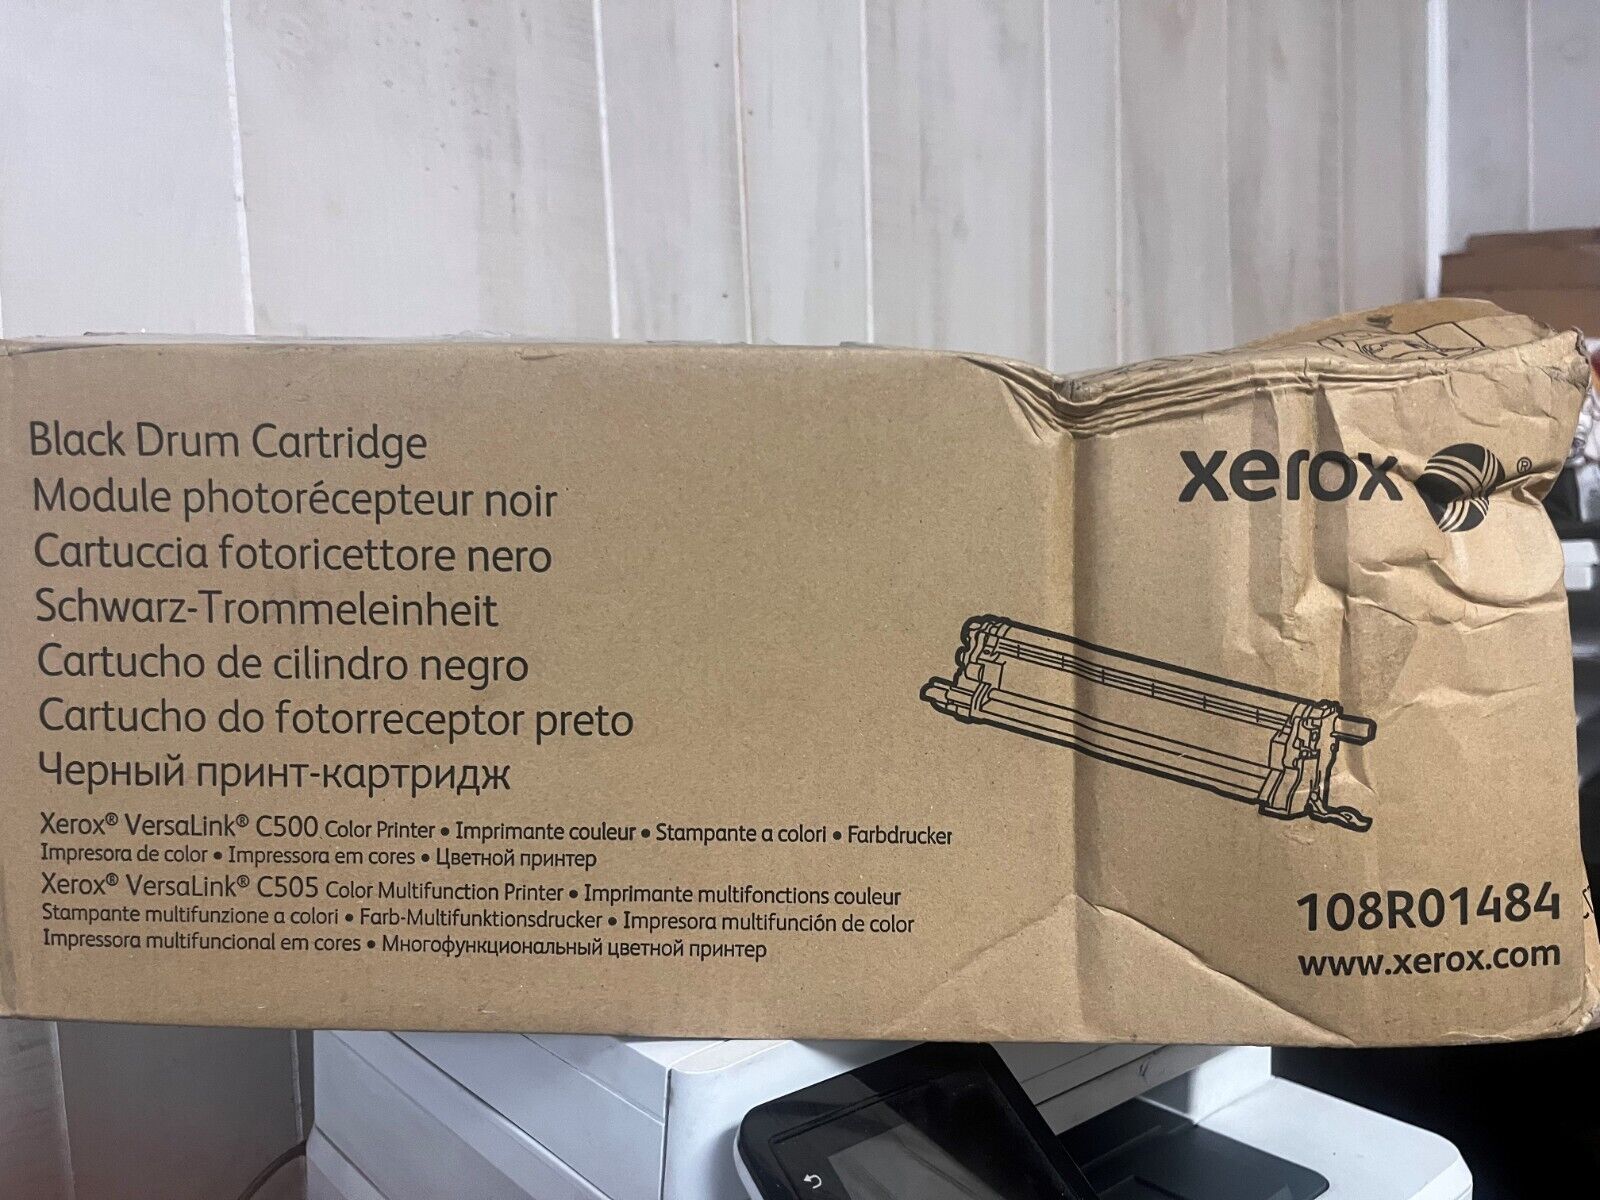 Genuine Xerox Black Drum Cartridge 108R01484 Open box - sealed bag